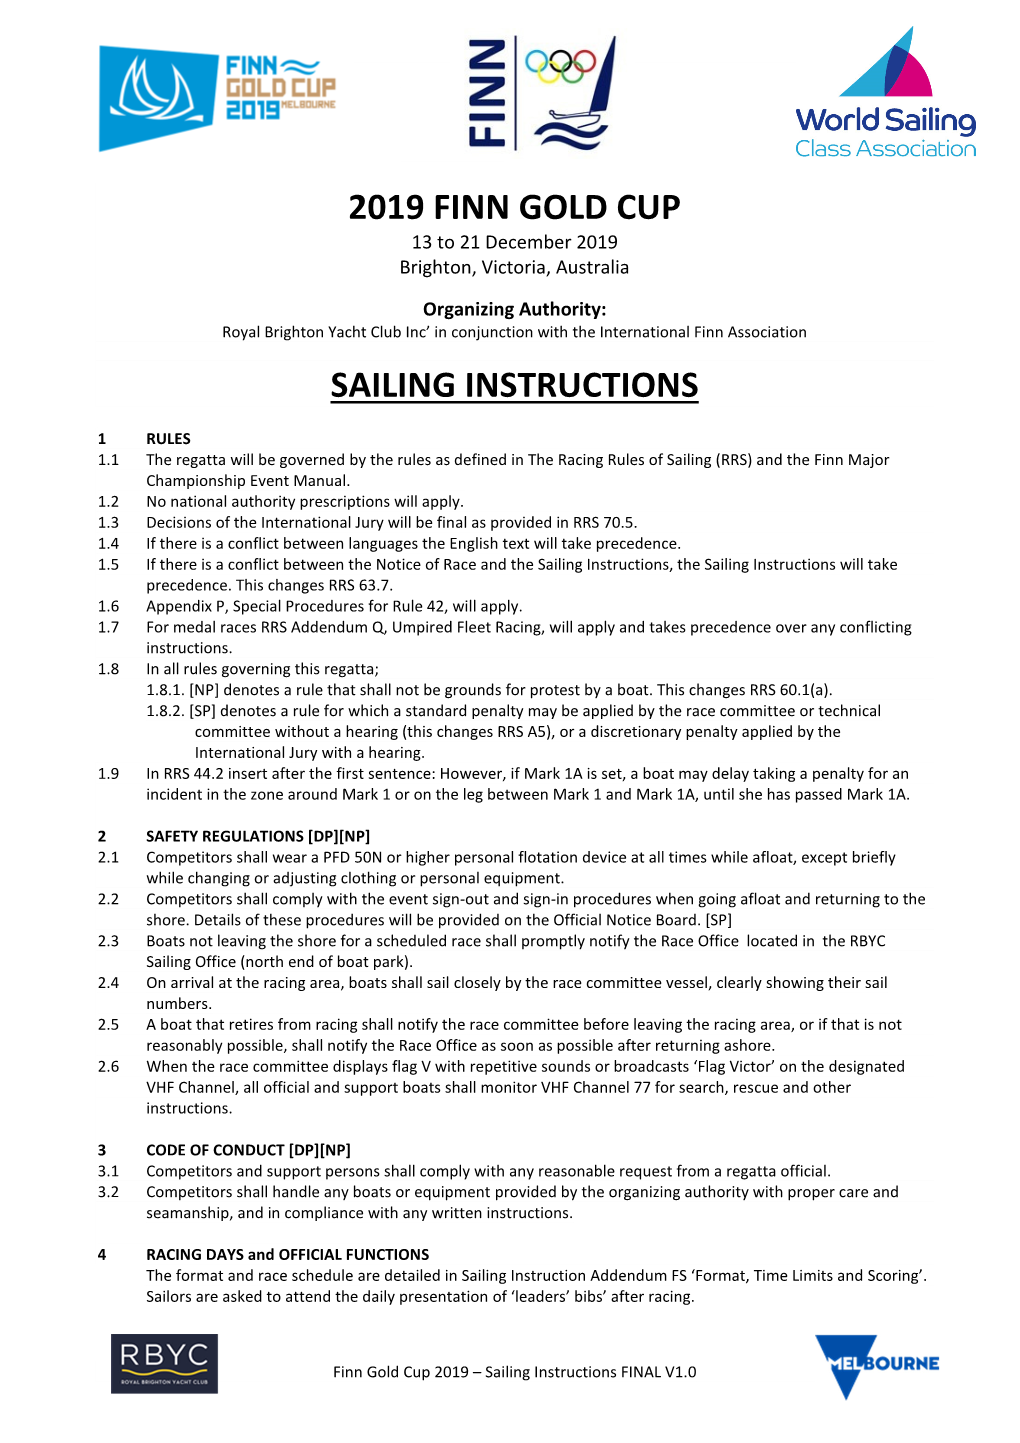 2019 Finn Gold Cup Sailing Instructions